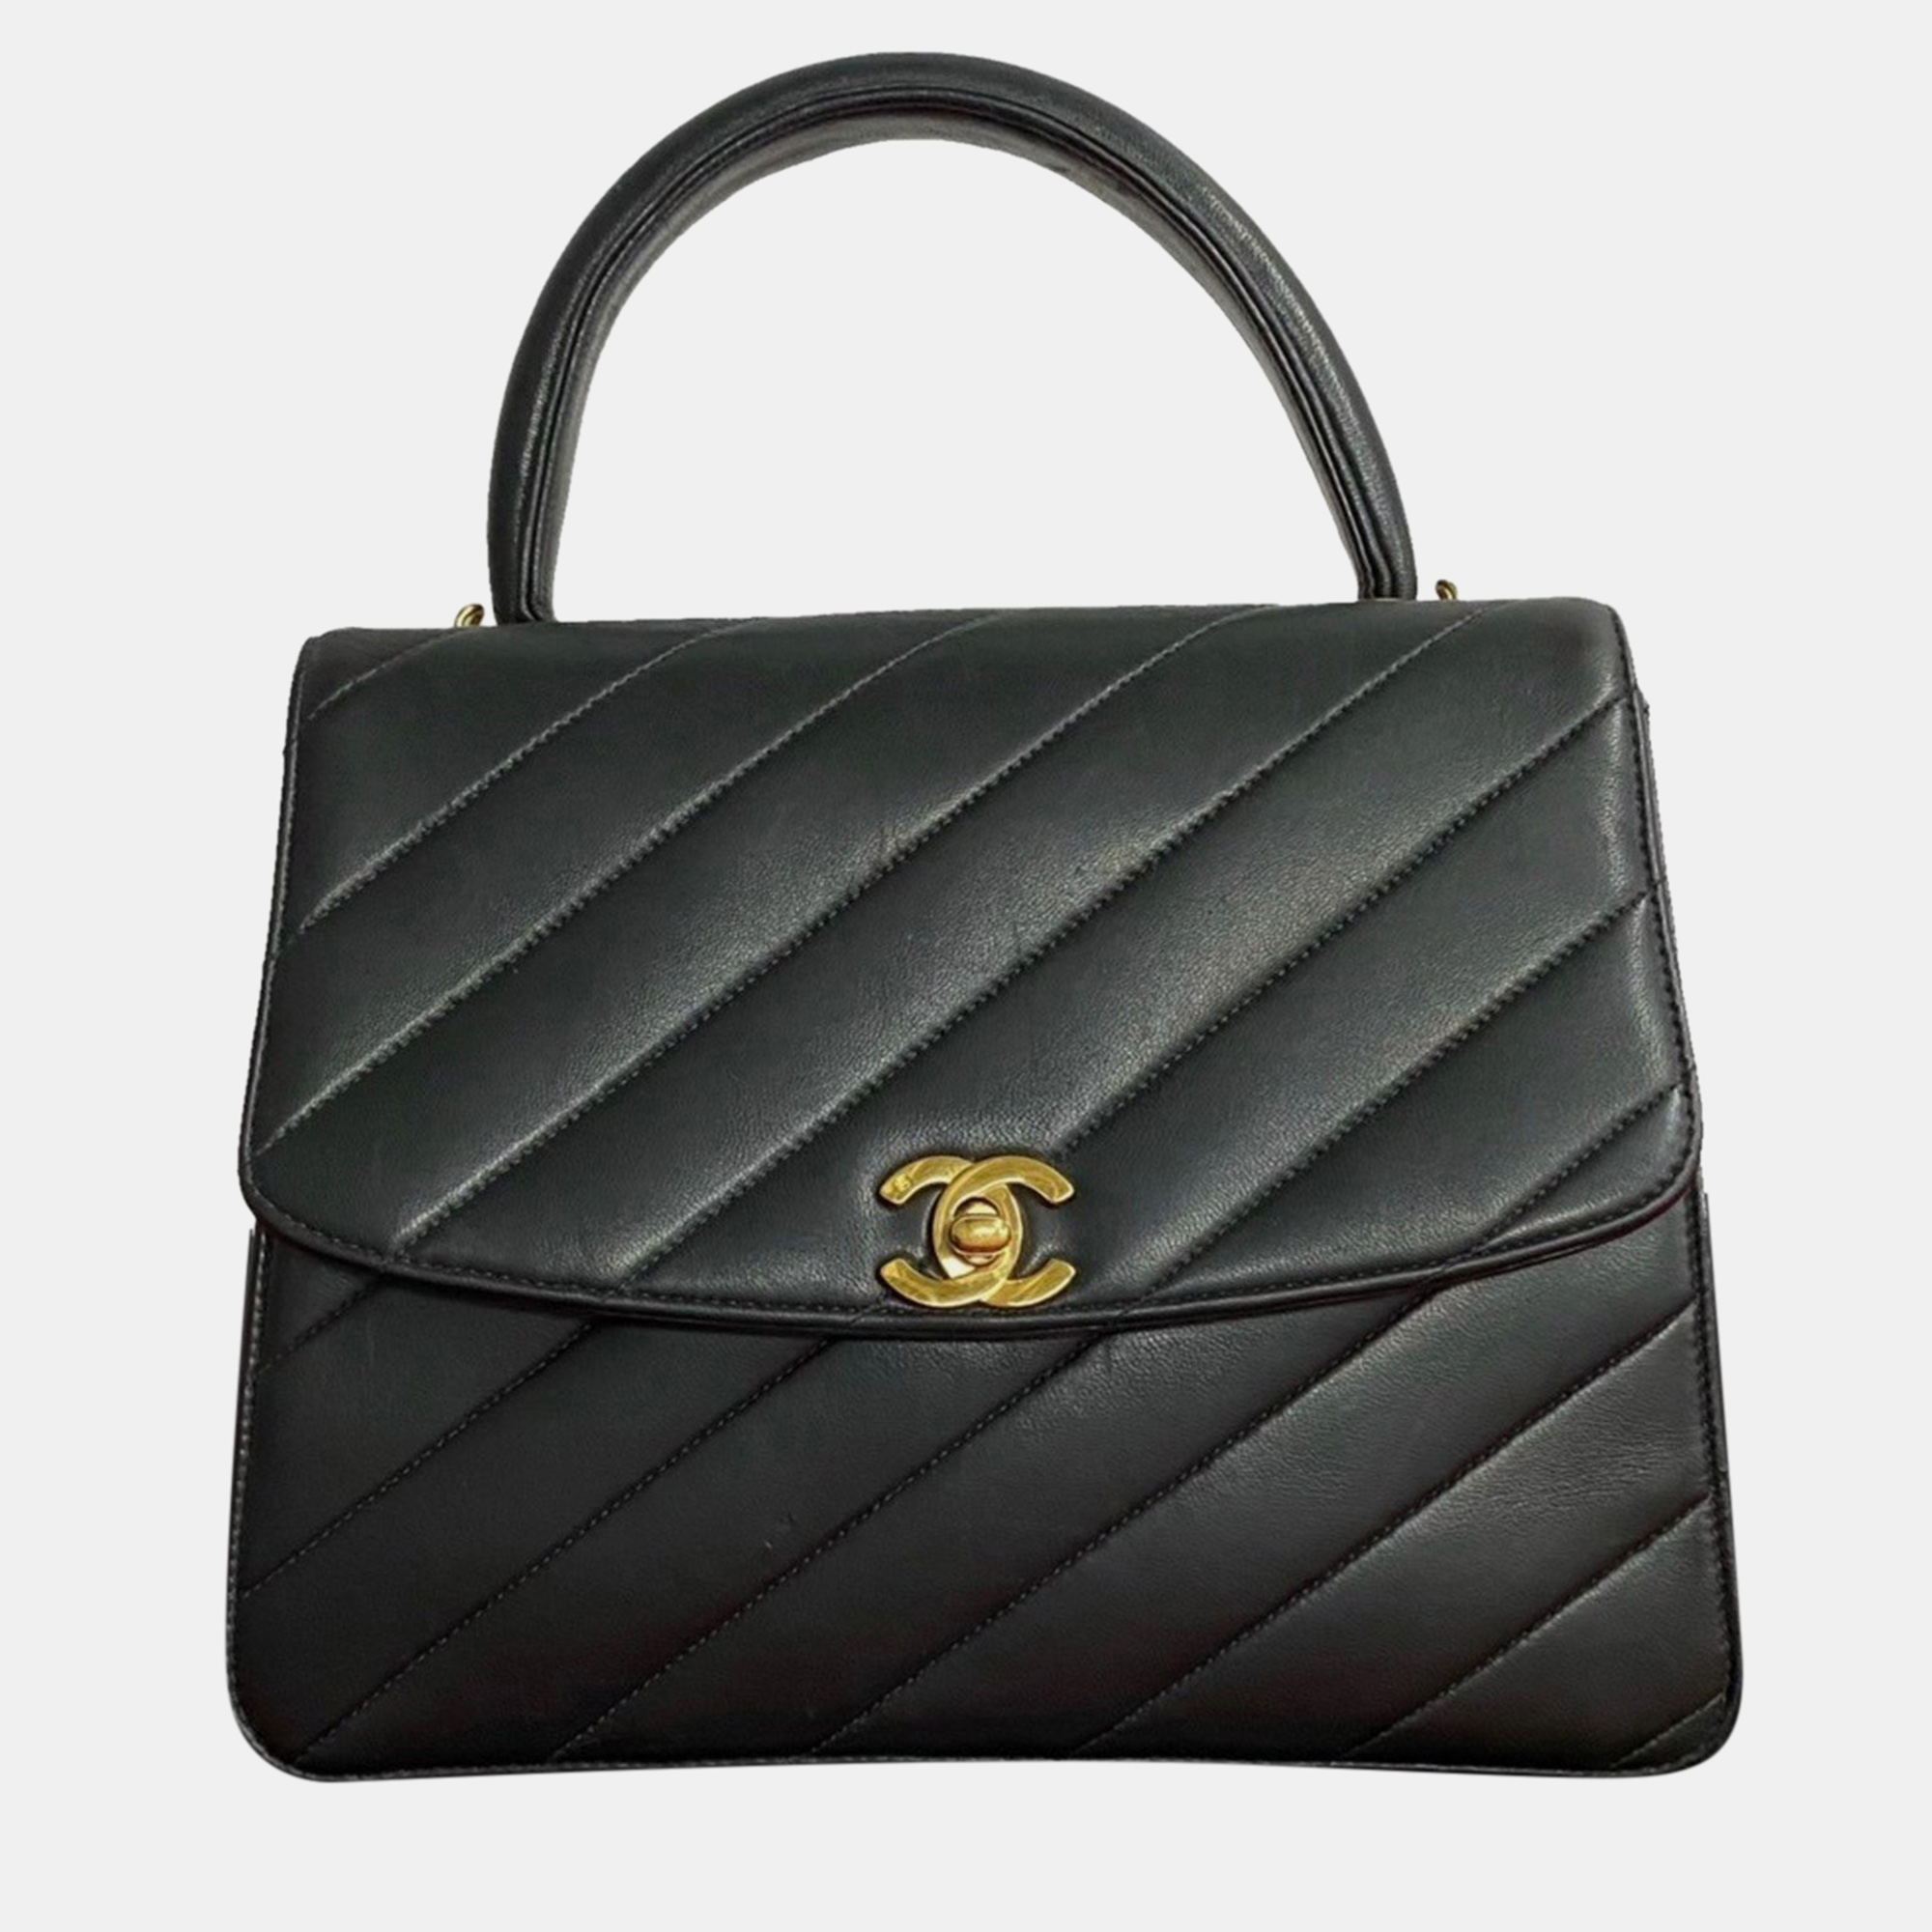 Chanel black lambskin quilted chevron hardware top handle kelly shoulder bag